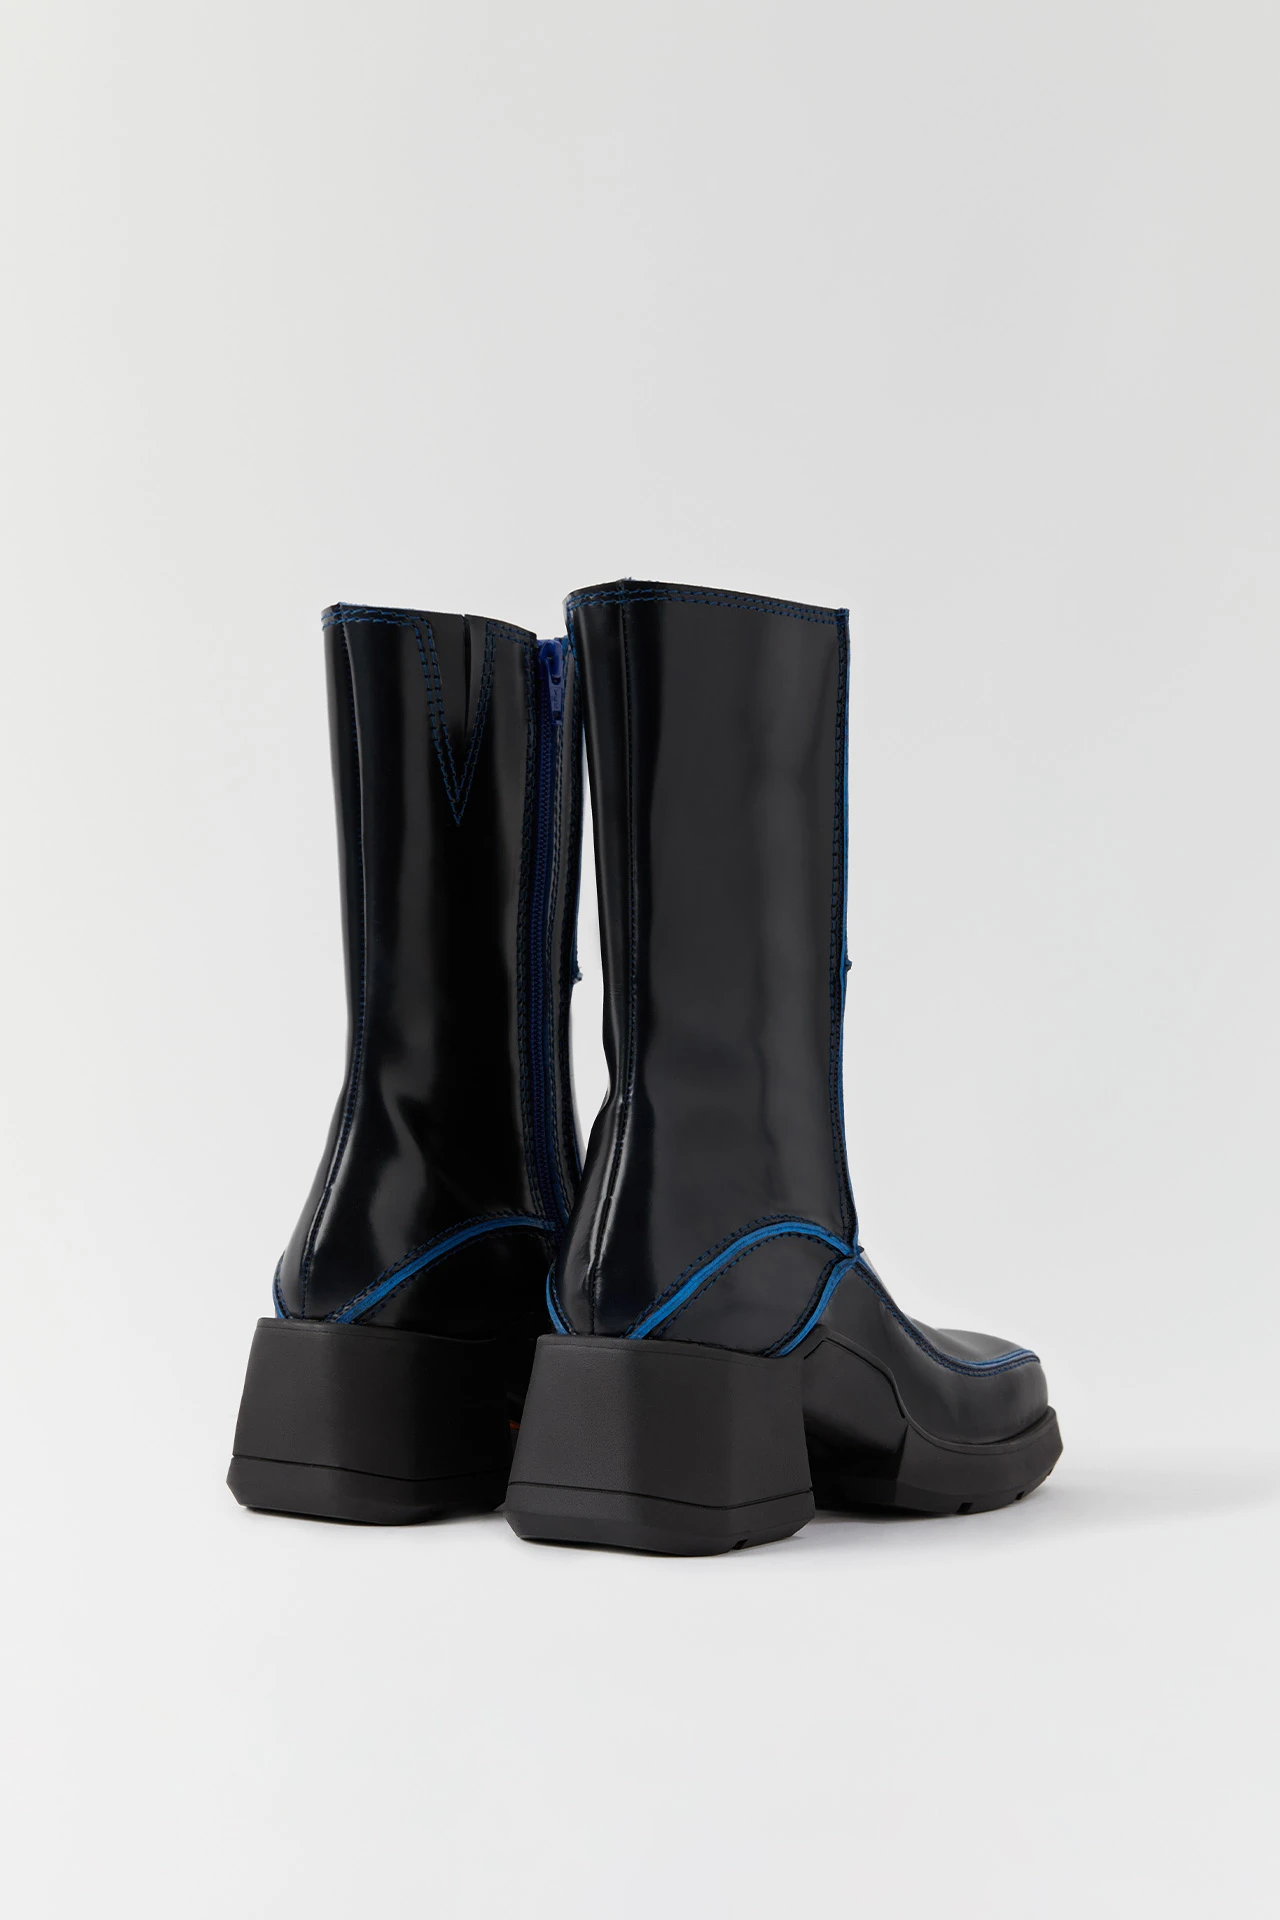 e8-meiko-black-blue-boots-02